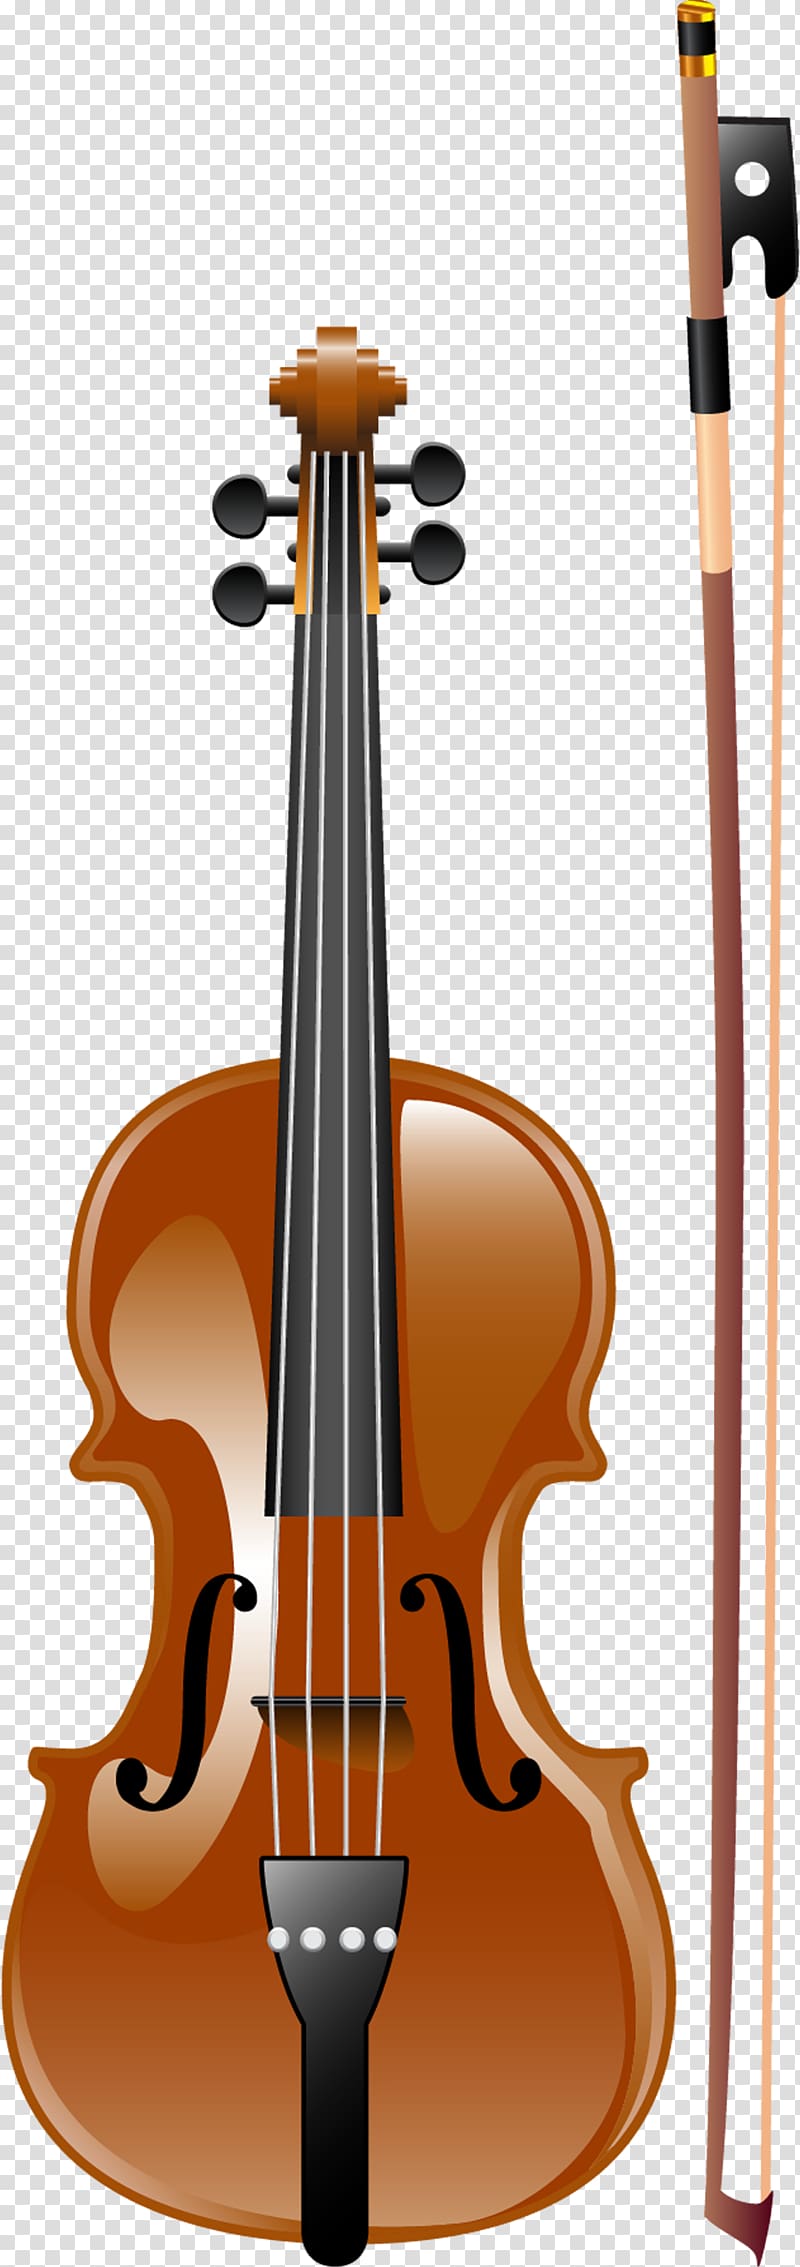 Musical Instruments Violin Viola Guitar, violin transparent background PNG clipart